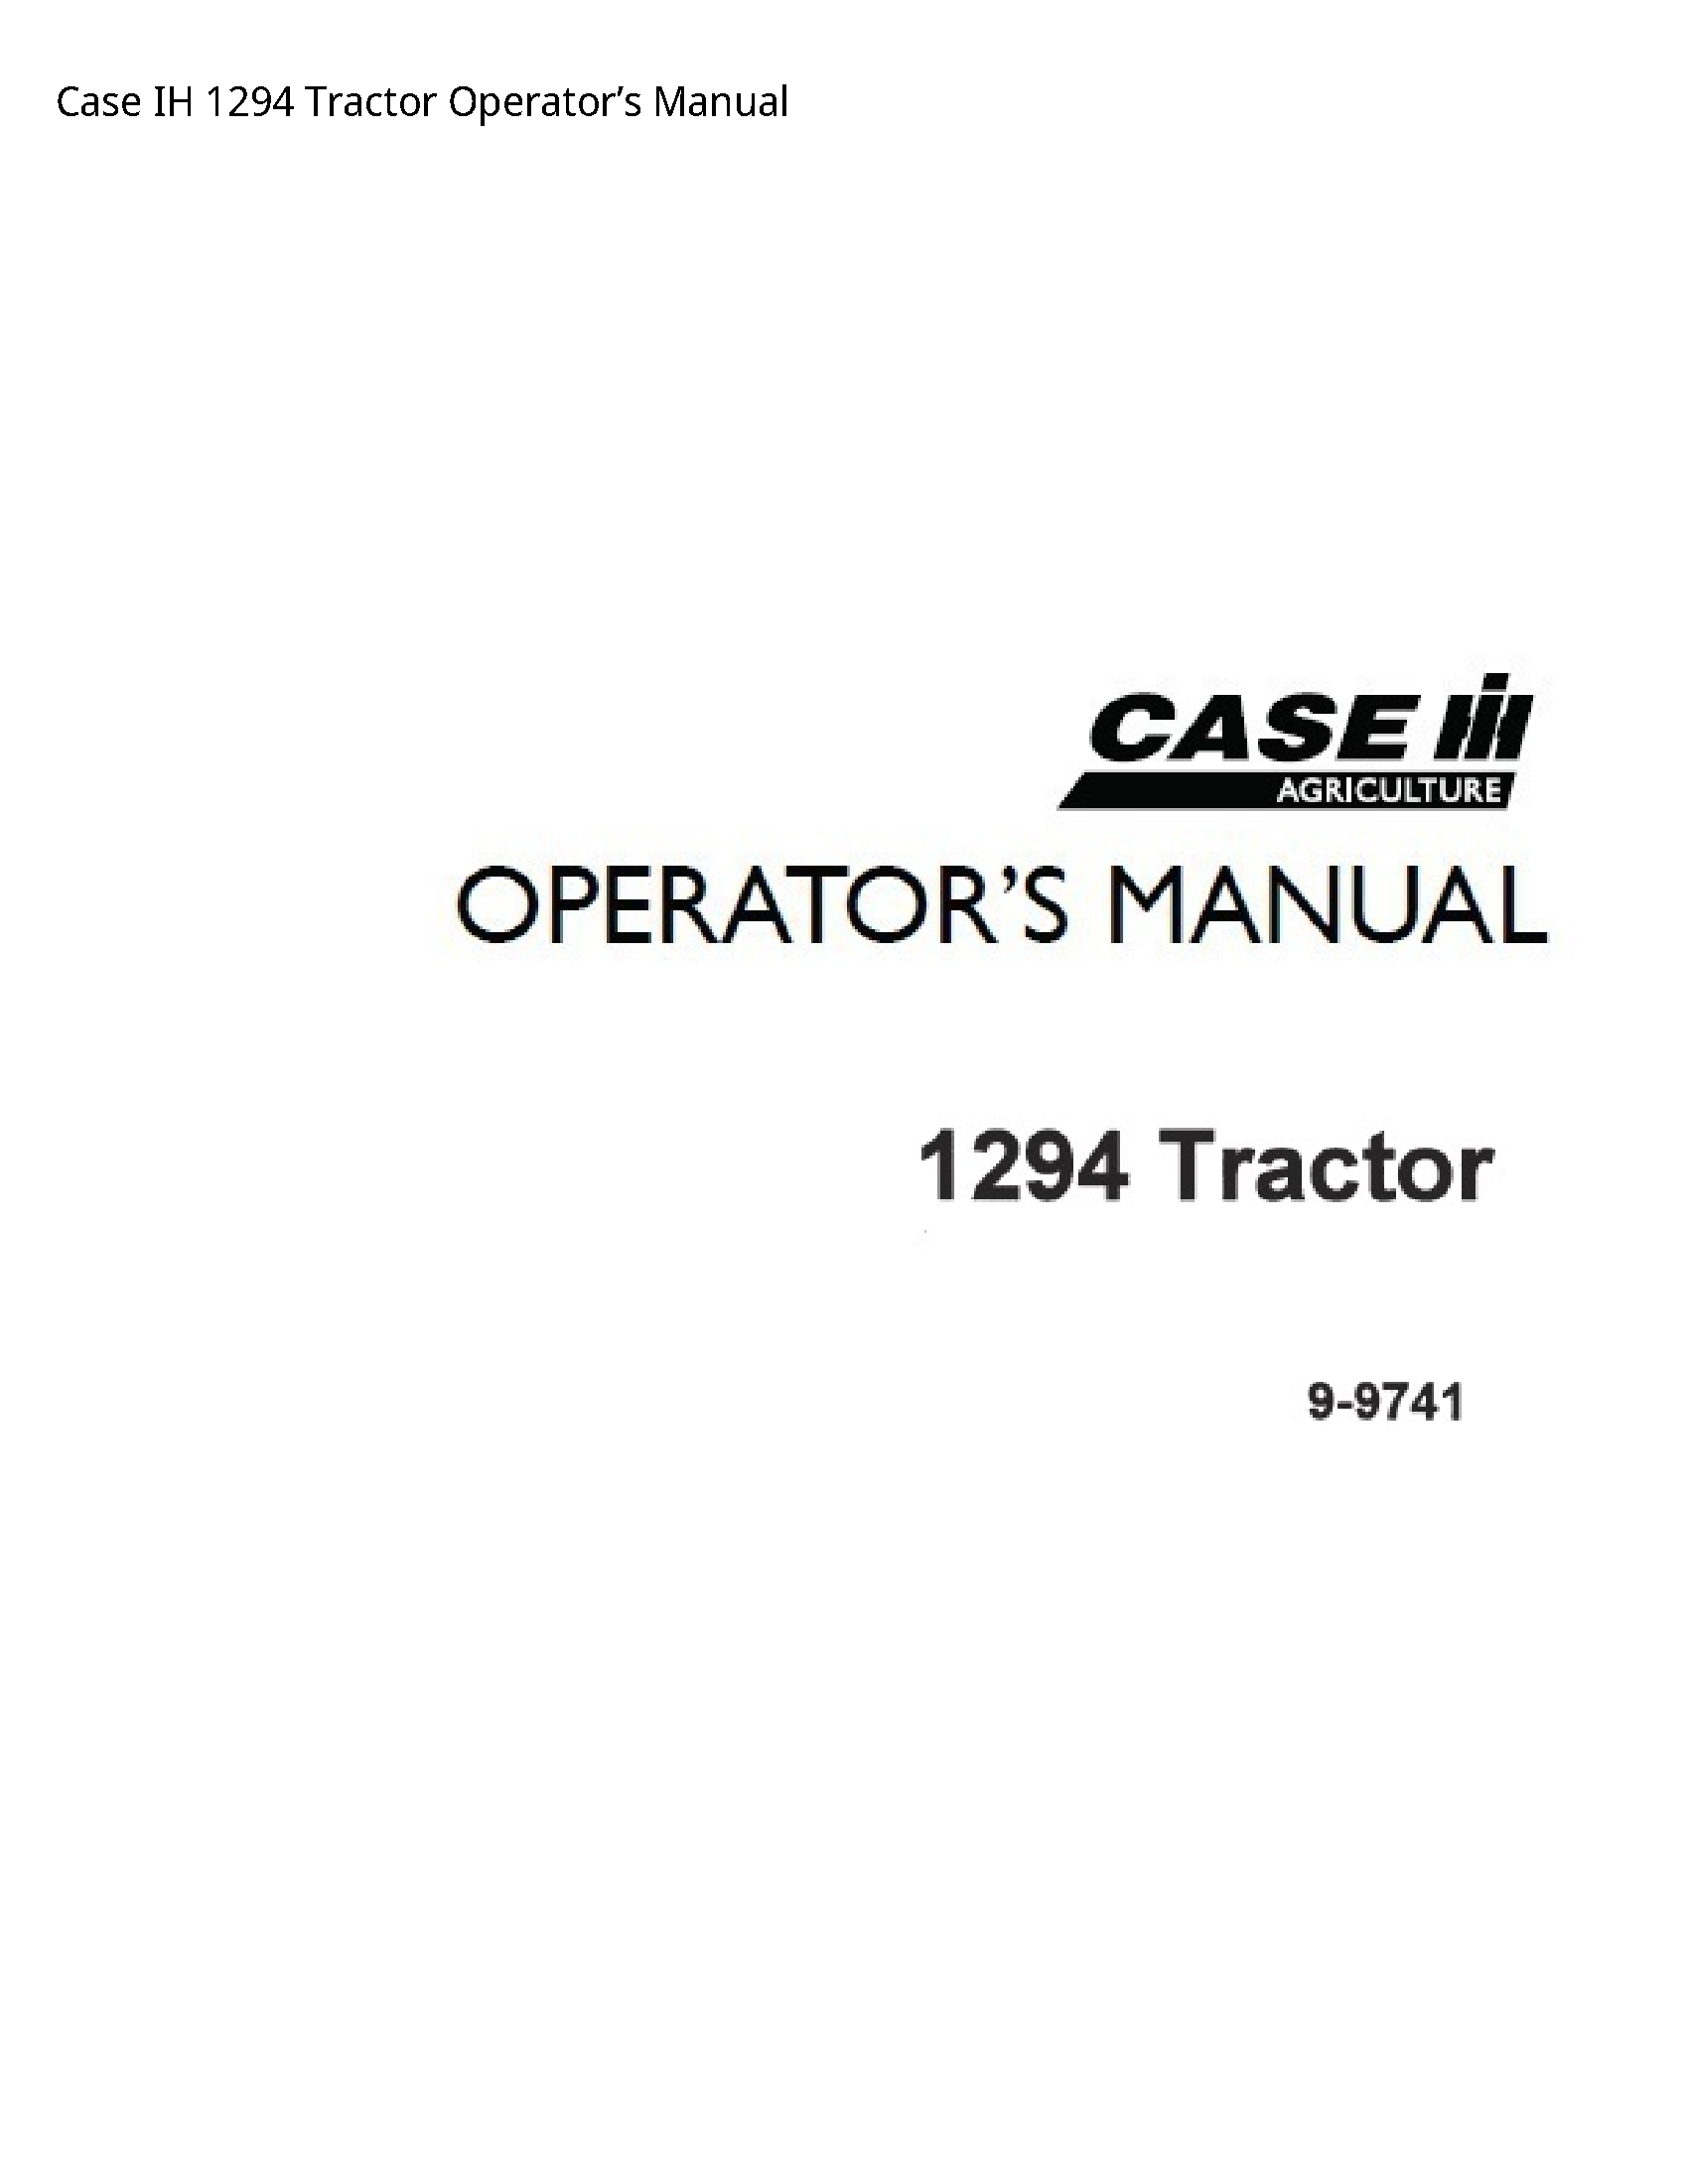 Case/Case IH 1294 IH Tractor Operator’s manual